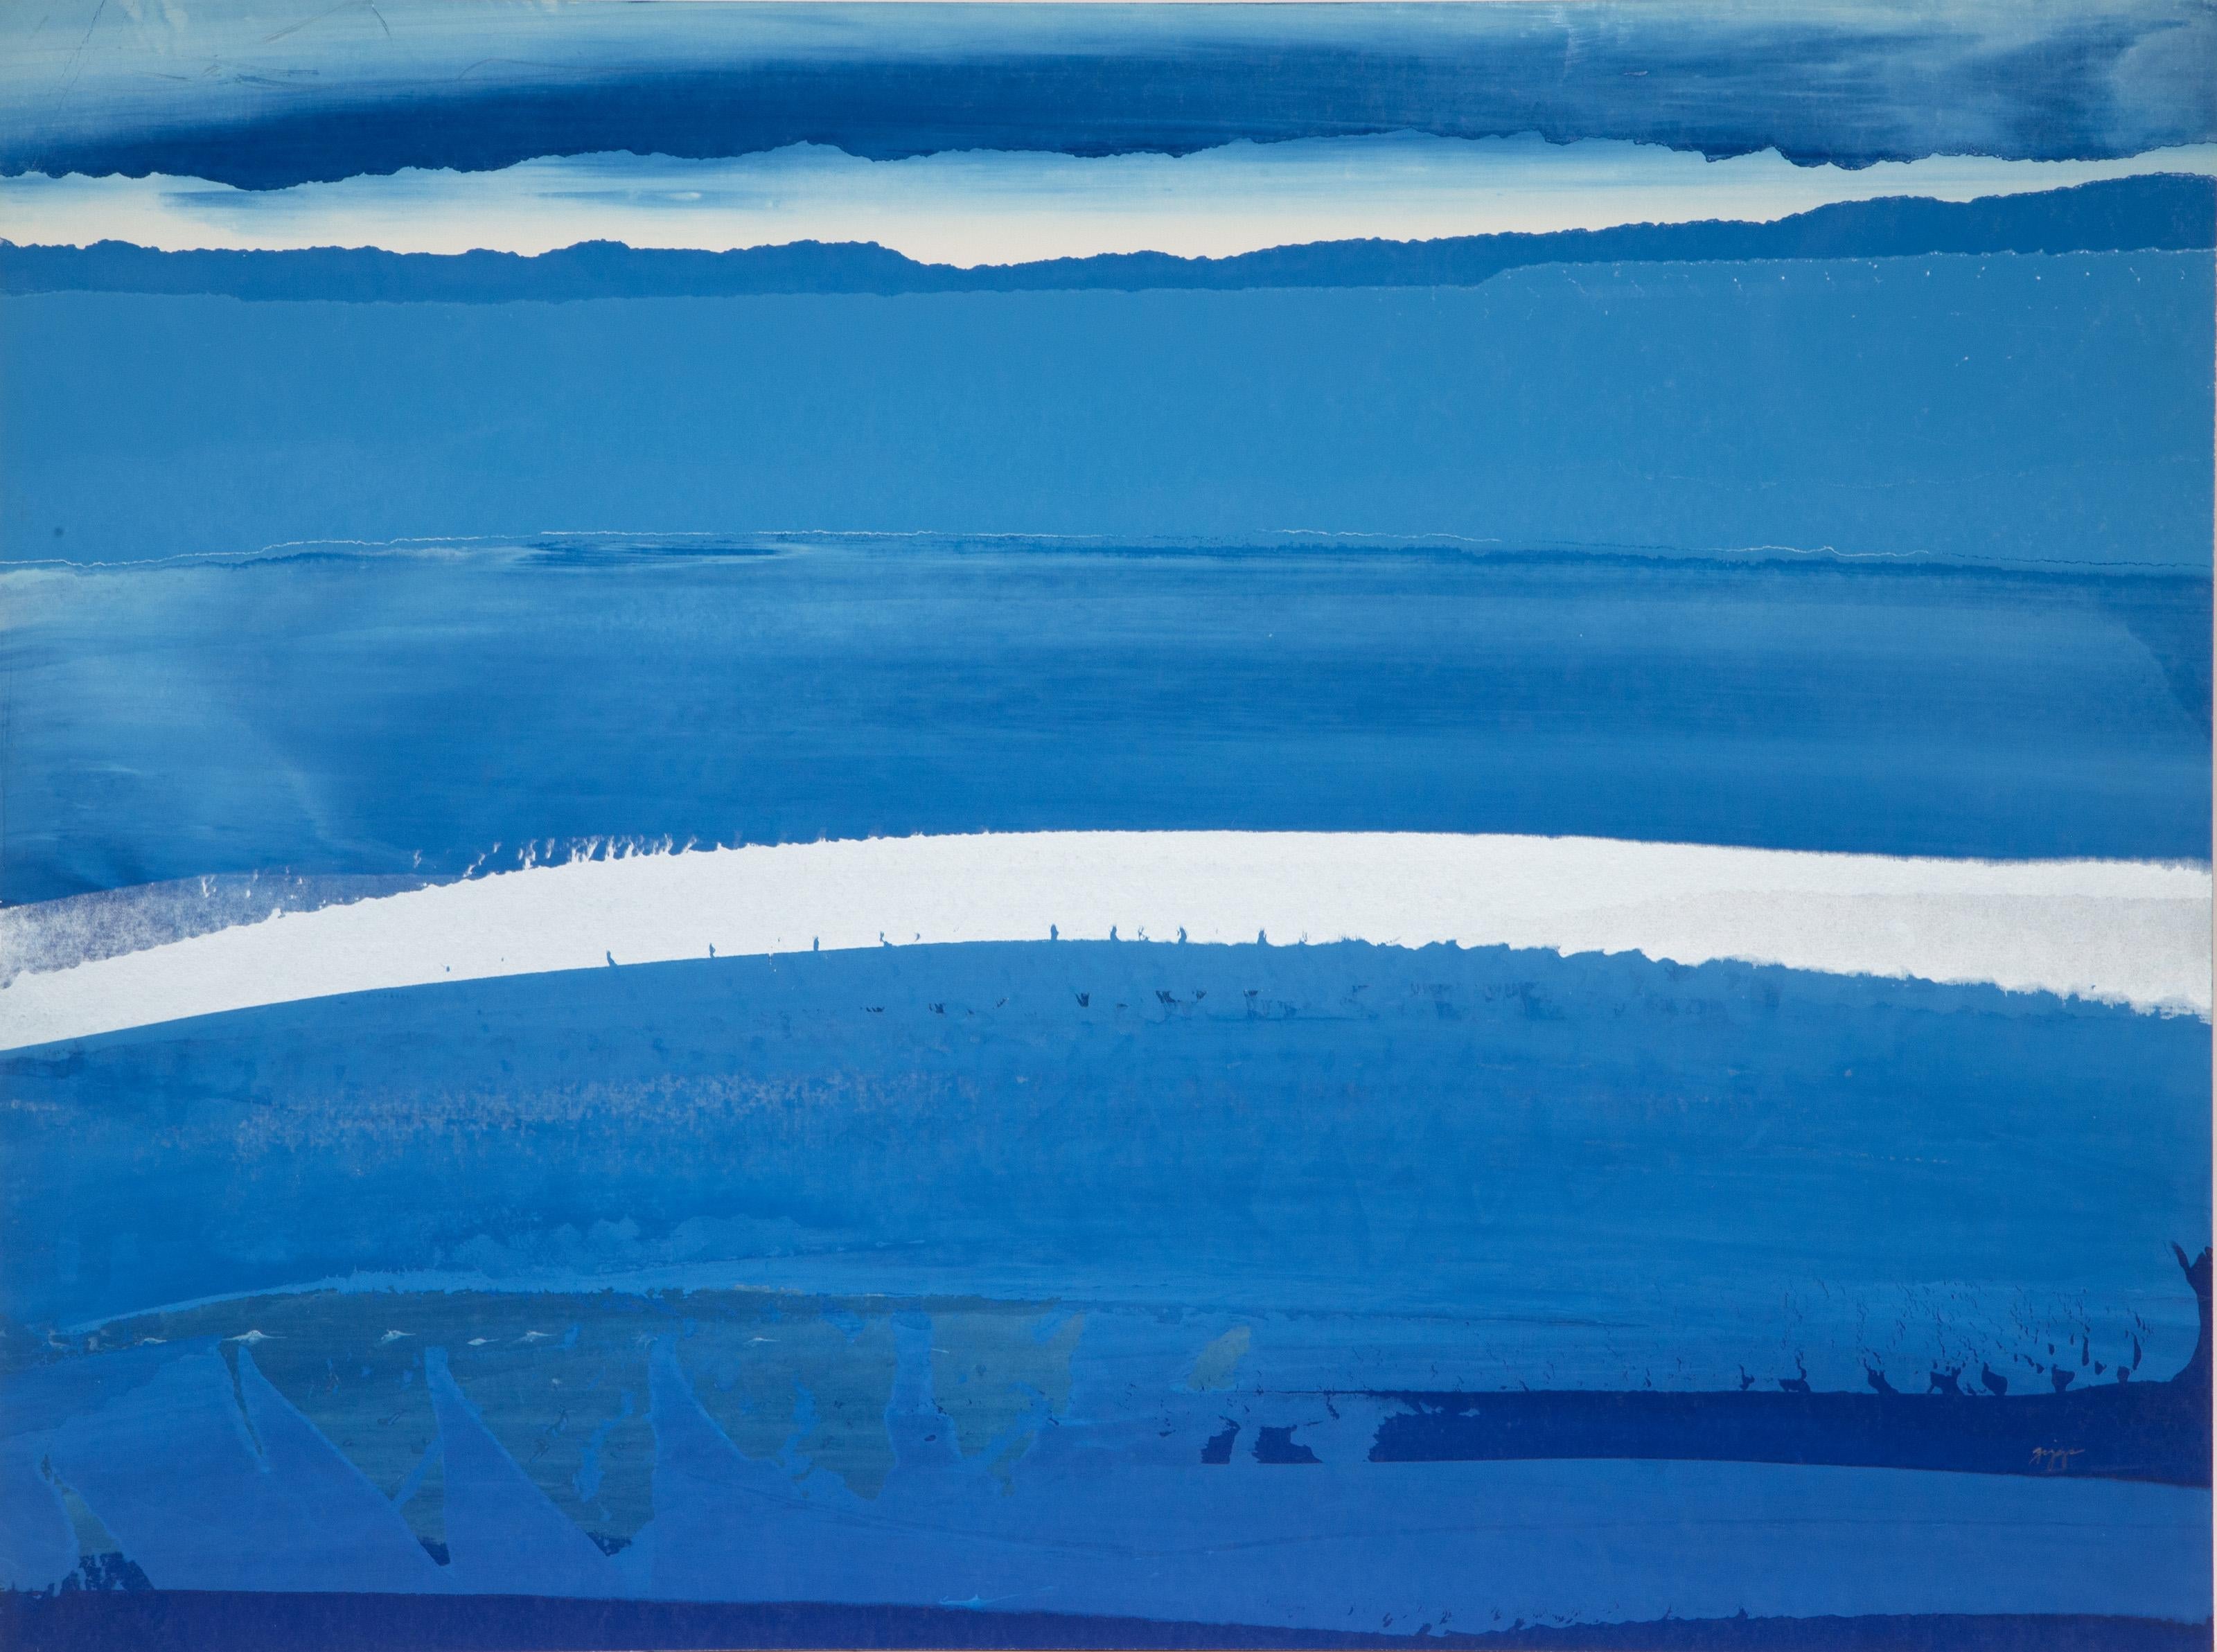 Landscape in Blue and Silver
Joseph Grippi, American (1924–2001)
Screenprint, signed in pencil
Size: 30 x 40 in. (76.2 x 101.6 cm)